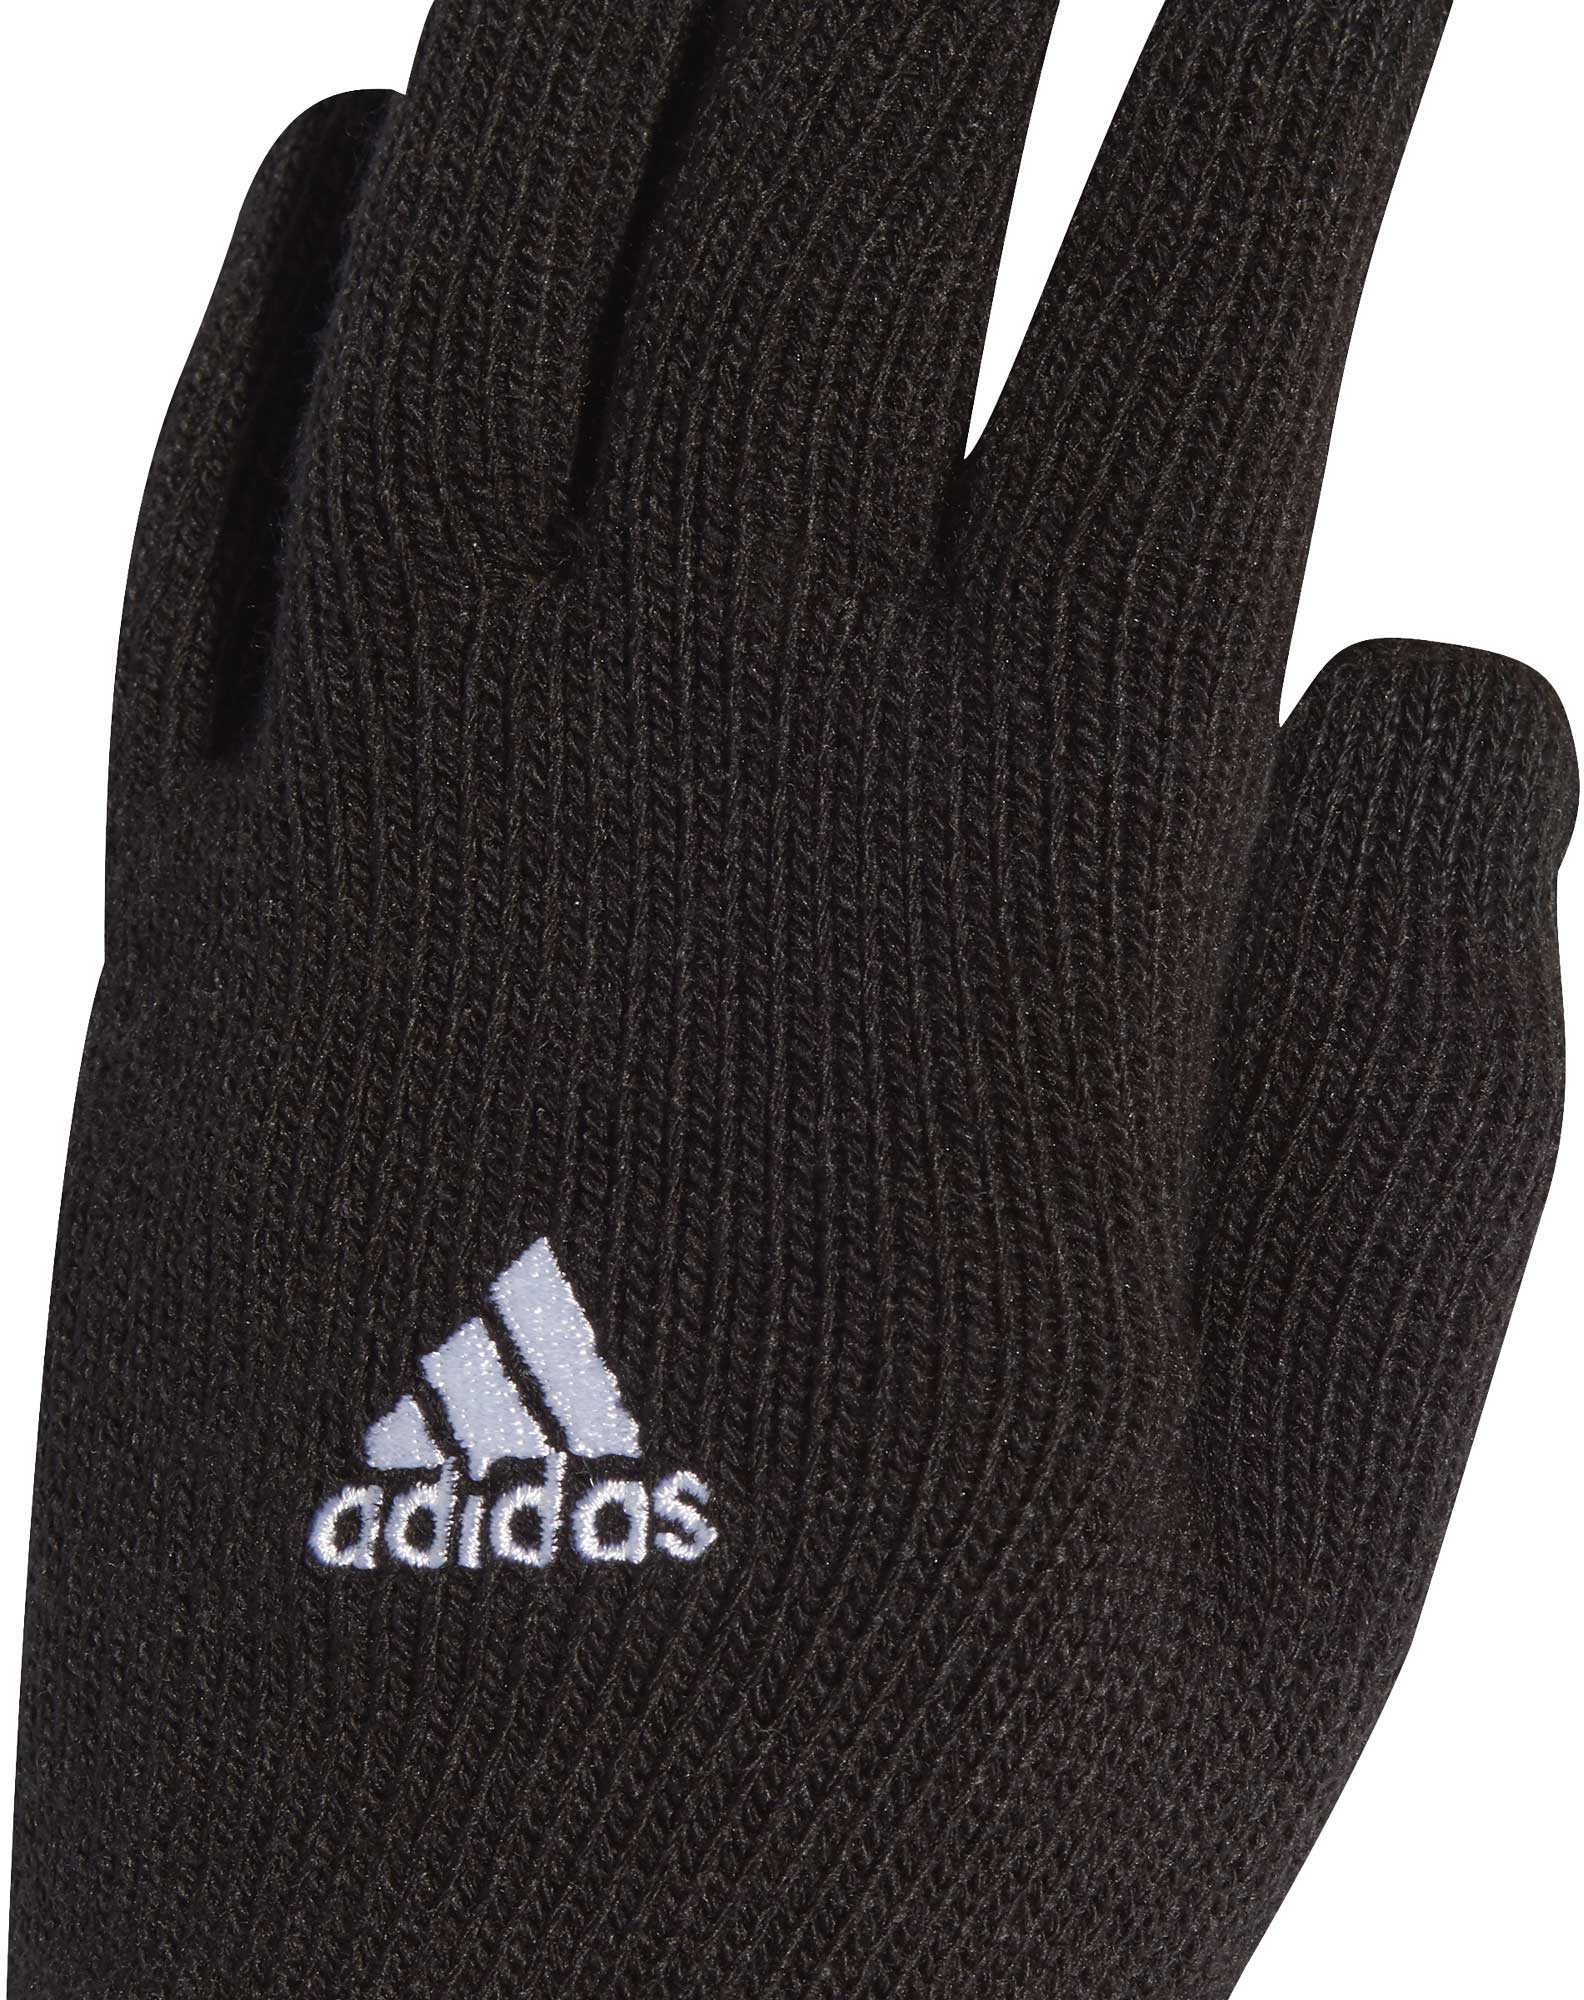 Men's match gloves